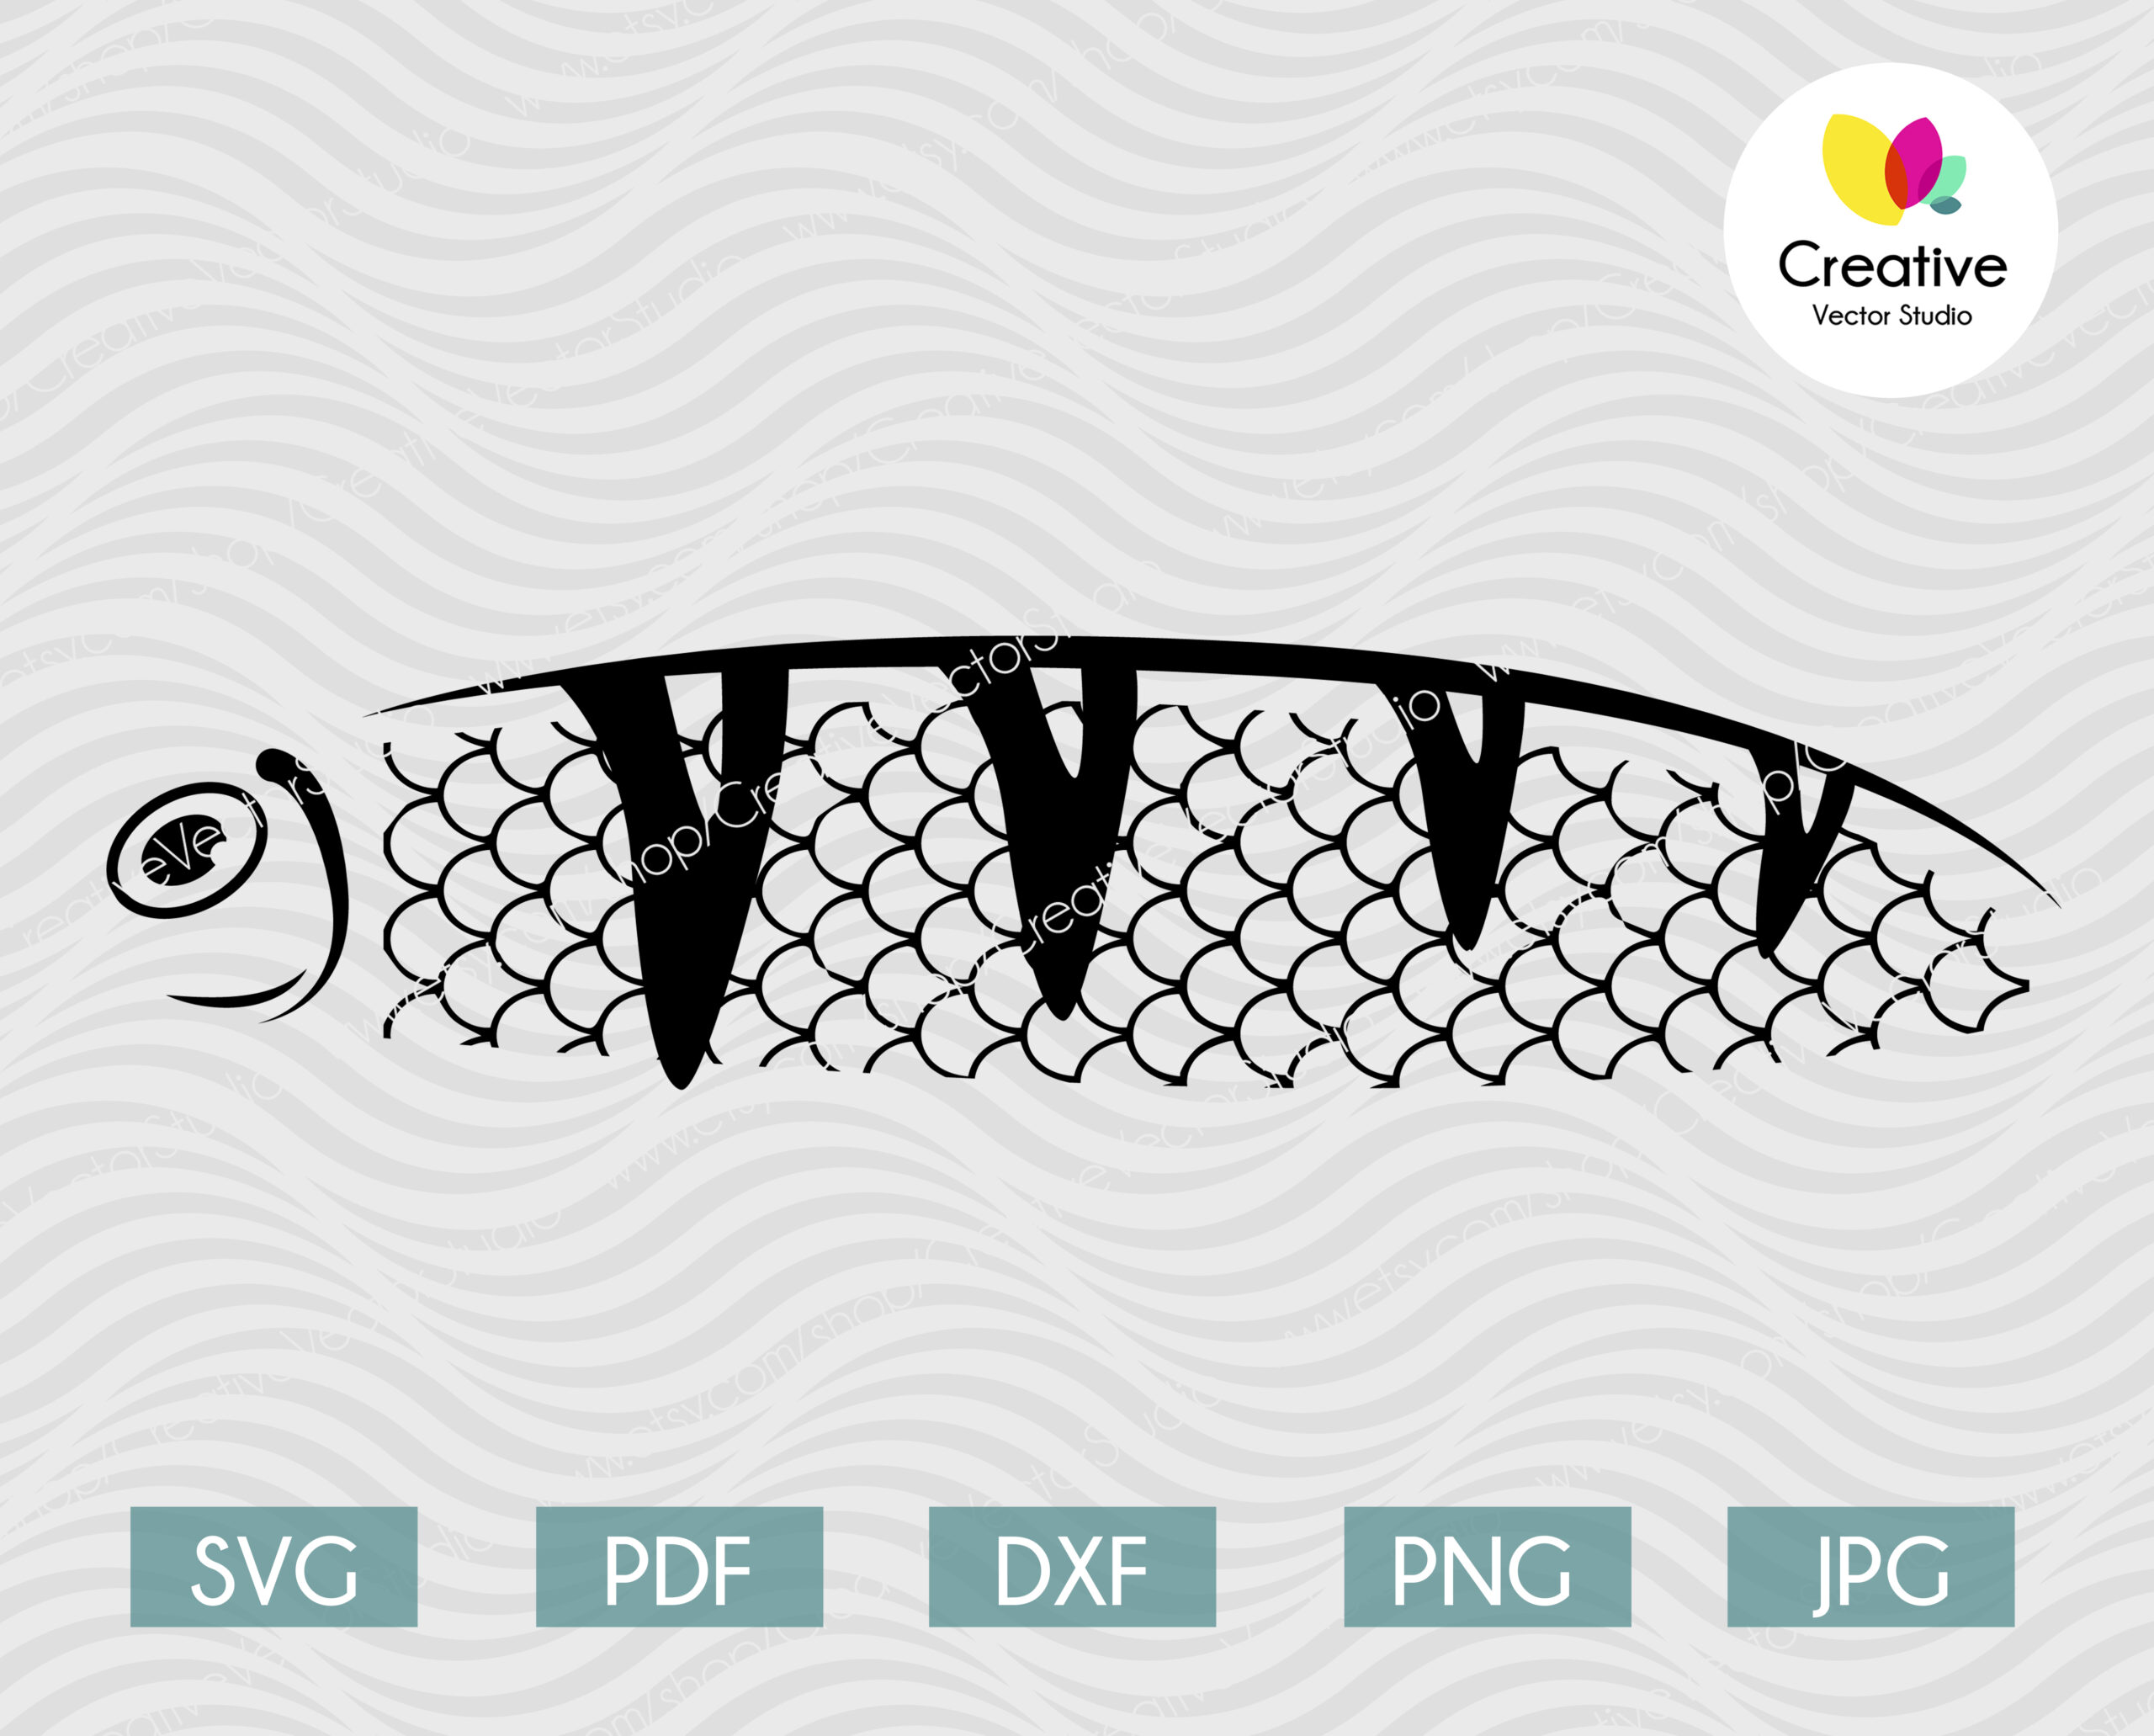 Fishing Lure SVG #35 Cut File Image | Creative Vector Studio